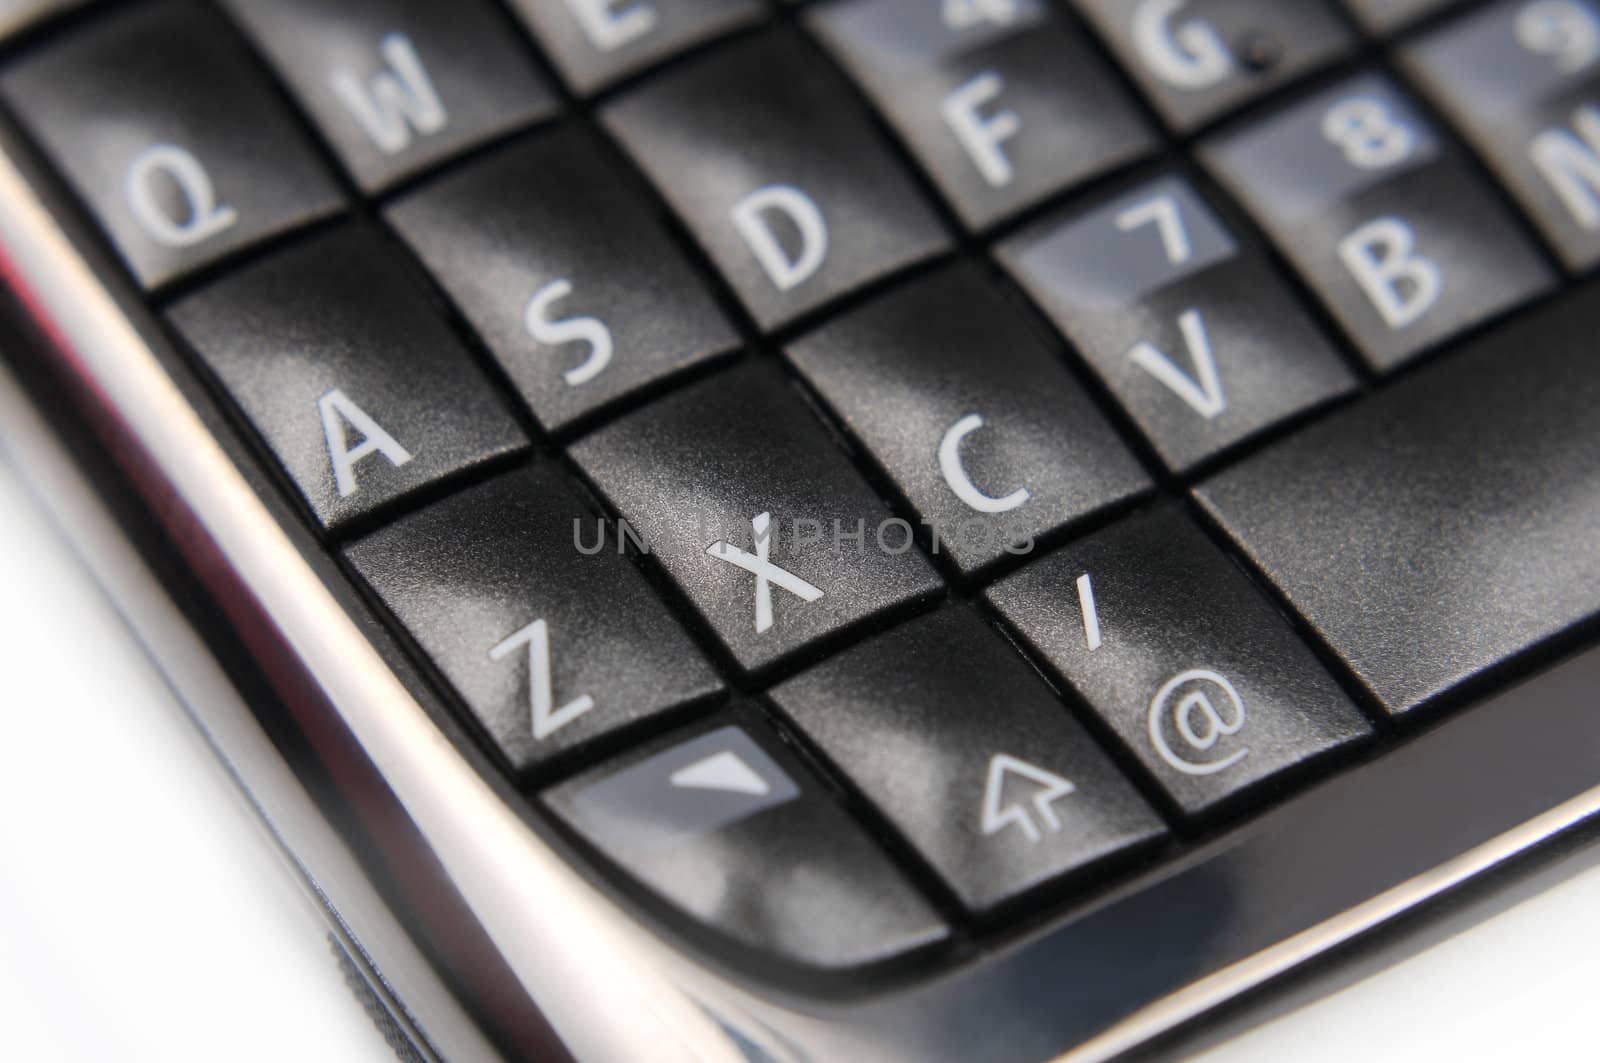 Smartphone keyboard by gravityimaging1